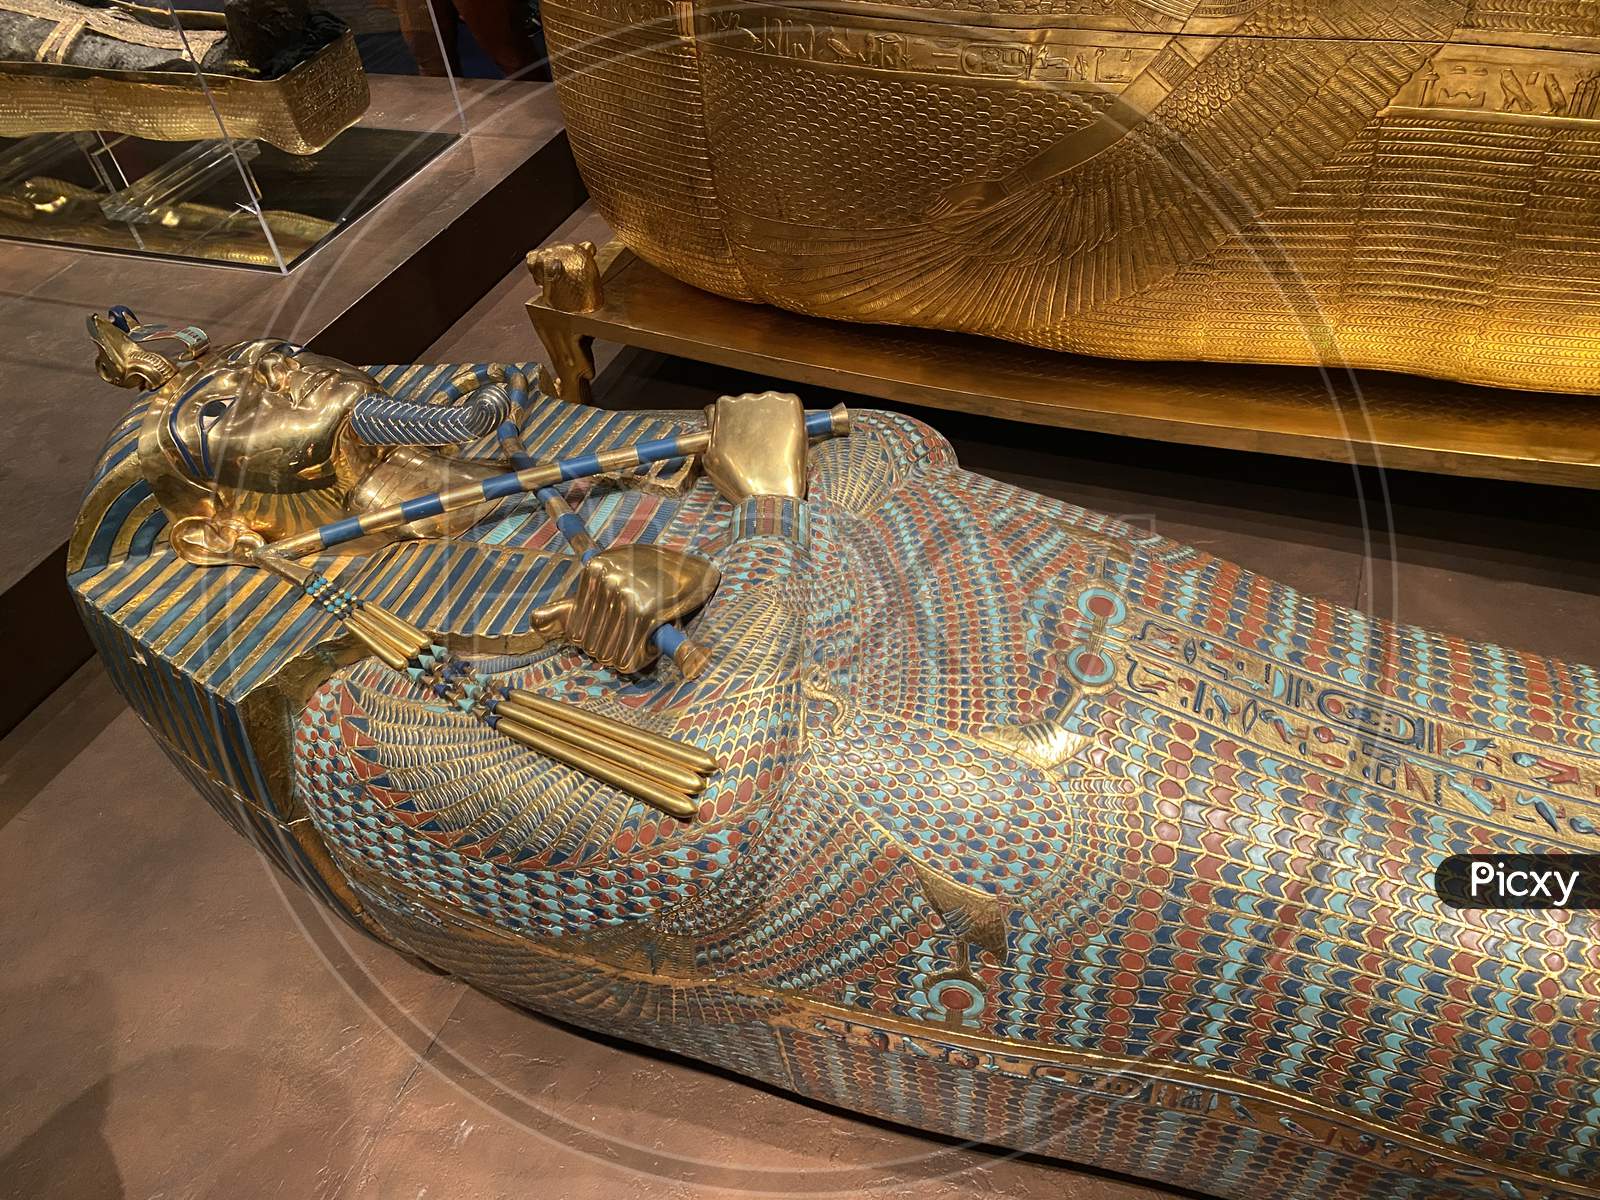 Middle Coffin Shows Pharaoh Tutanchamun And Famous Gold Mask. 14.03.2021 - Oerlikon, Switzerland.